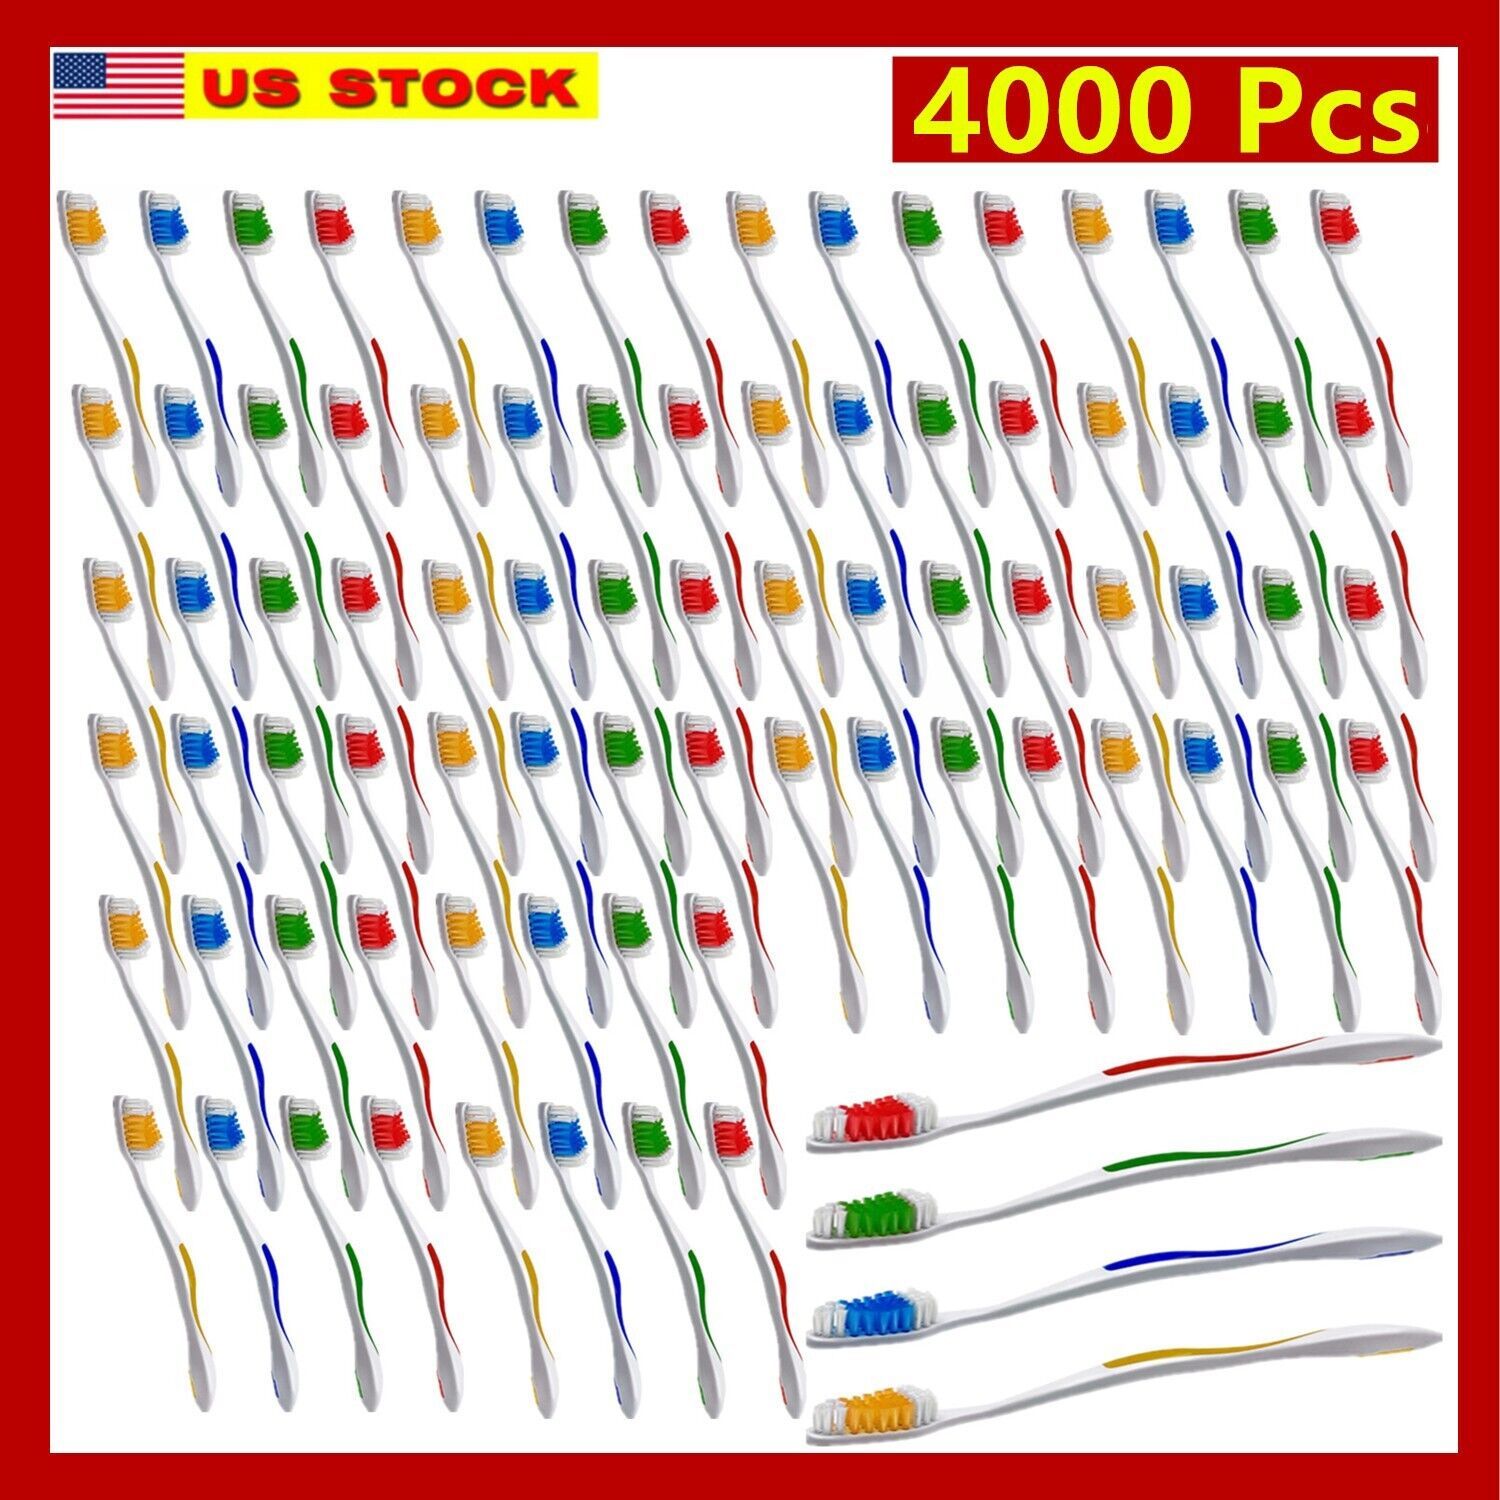 4000 Pcs Classic Toothbrush Medium Soft Toothbrushes Wholesale Free Shipping - $445.50